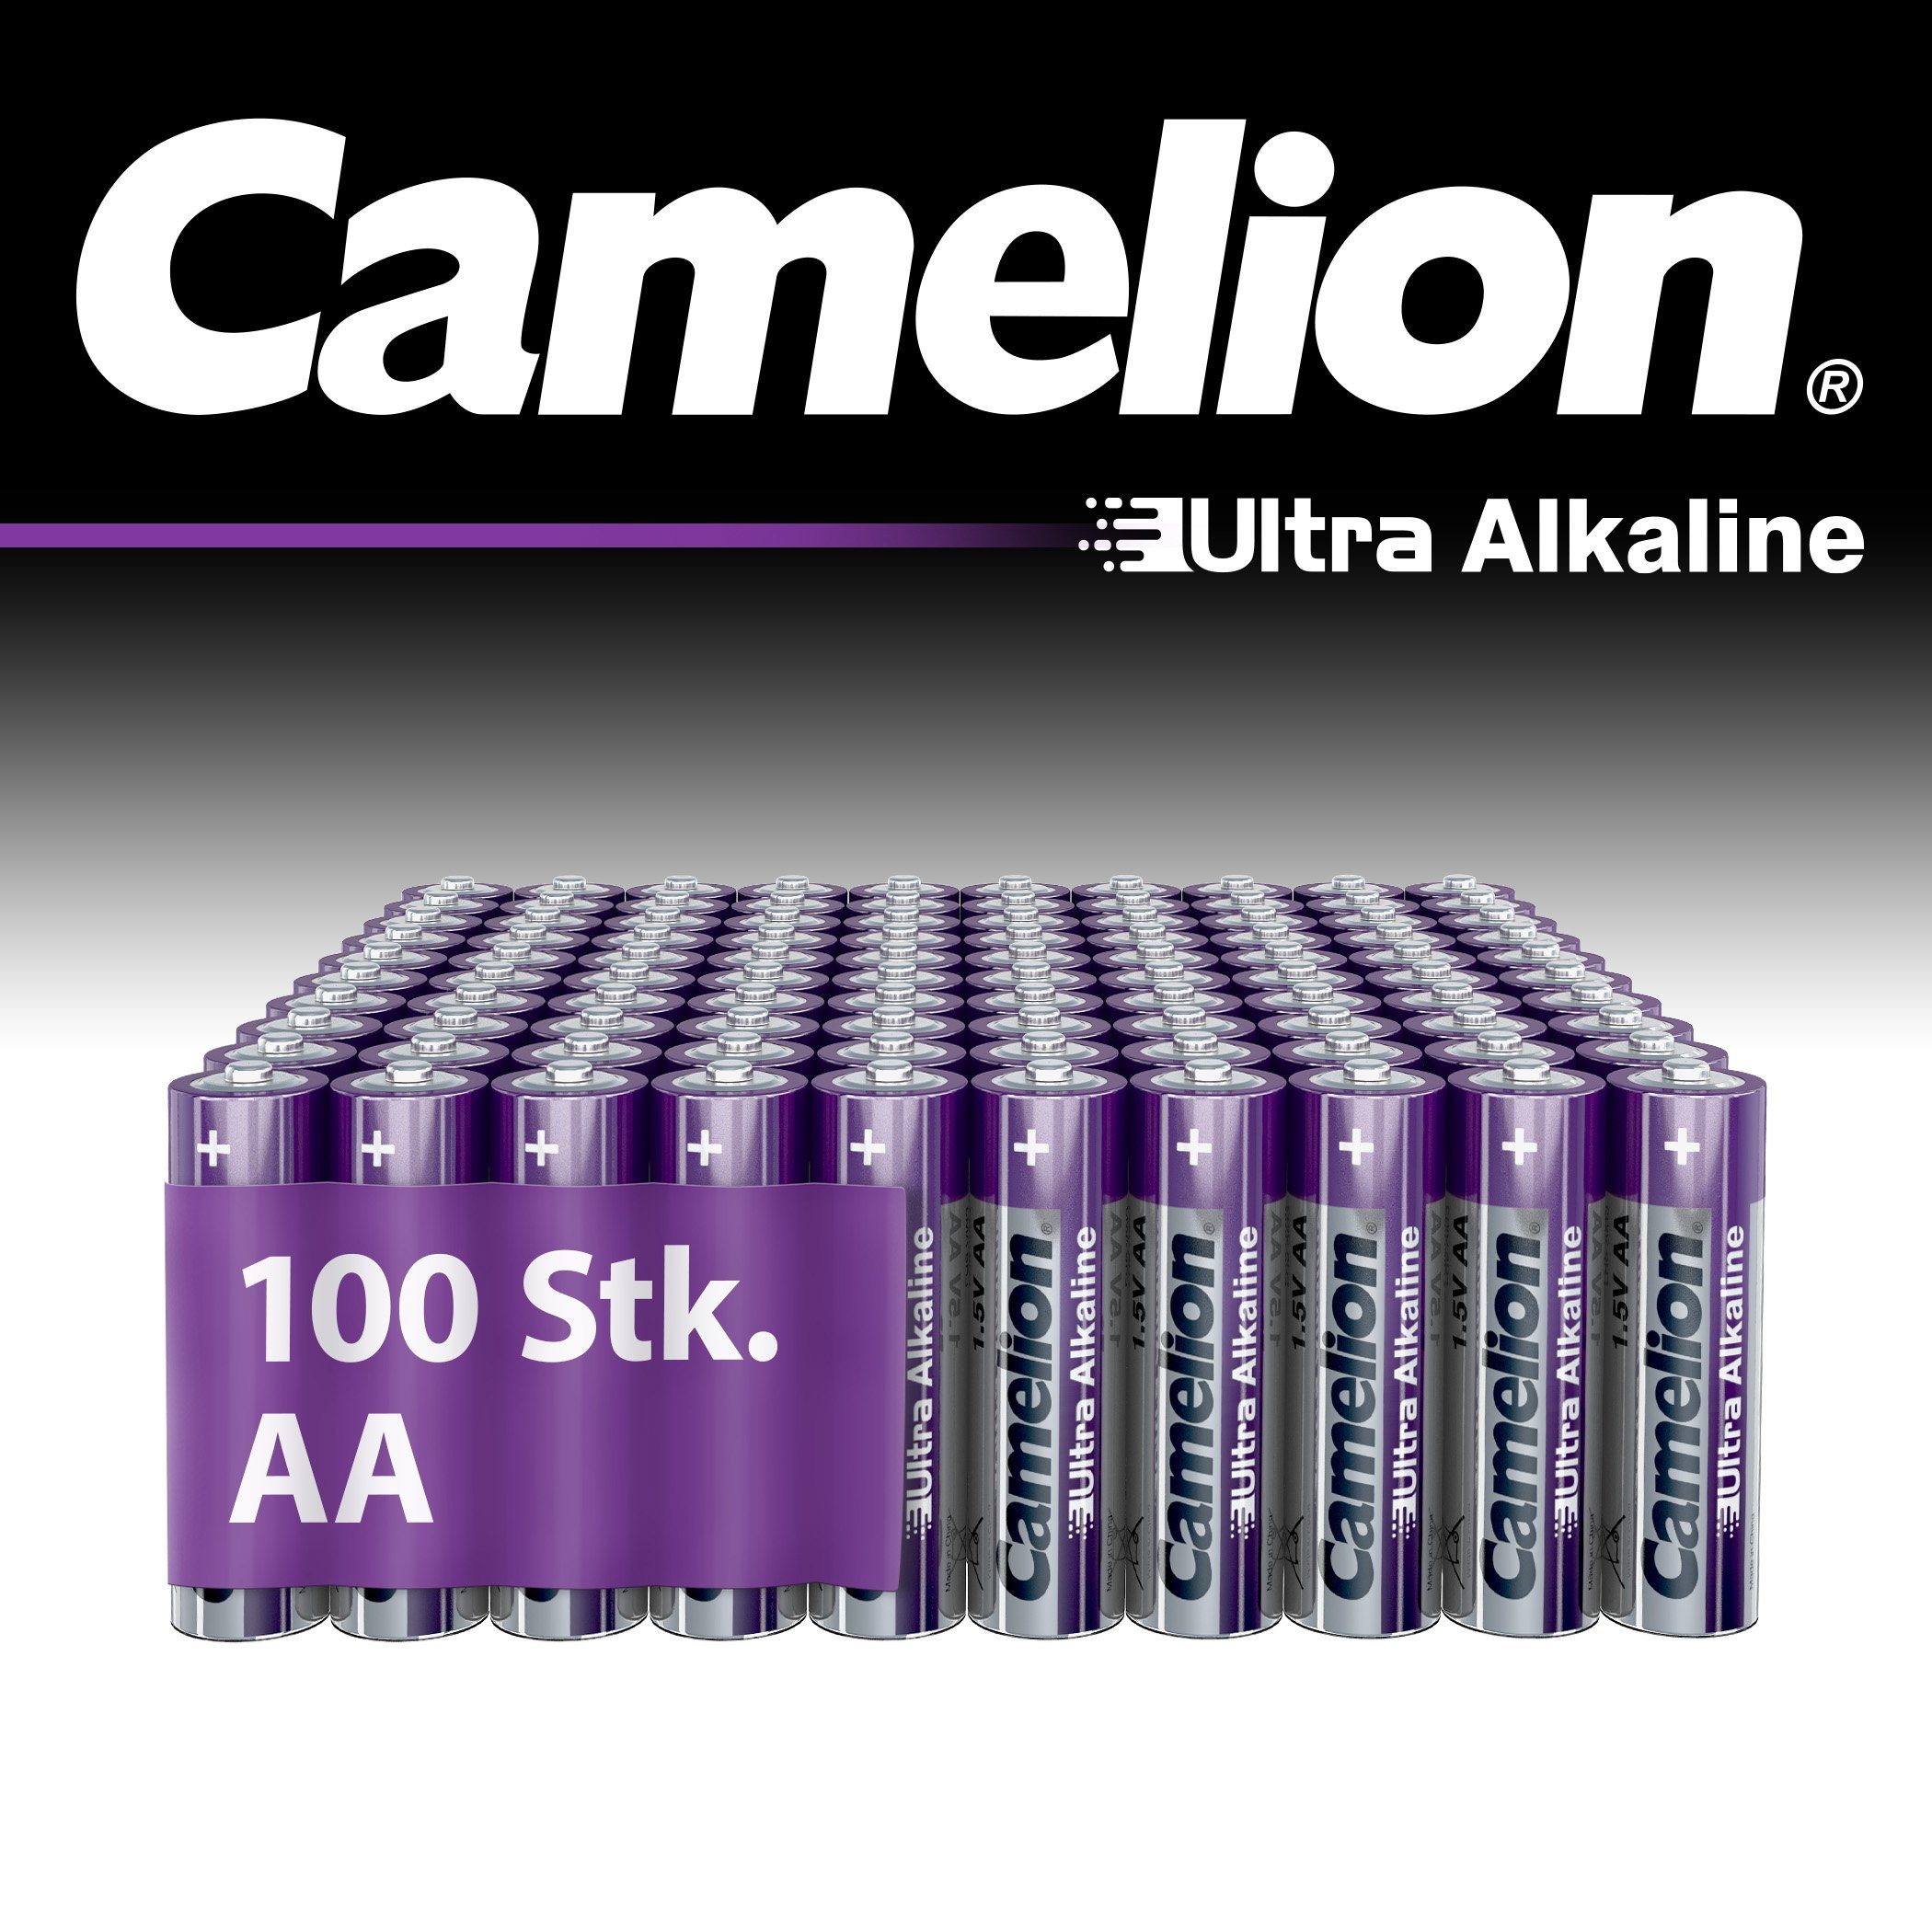 Camelion 100 x Camelion Alkaline (100 AA St) Batterie, Ultra